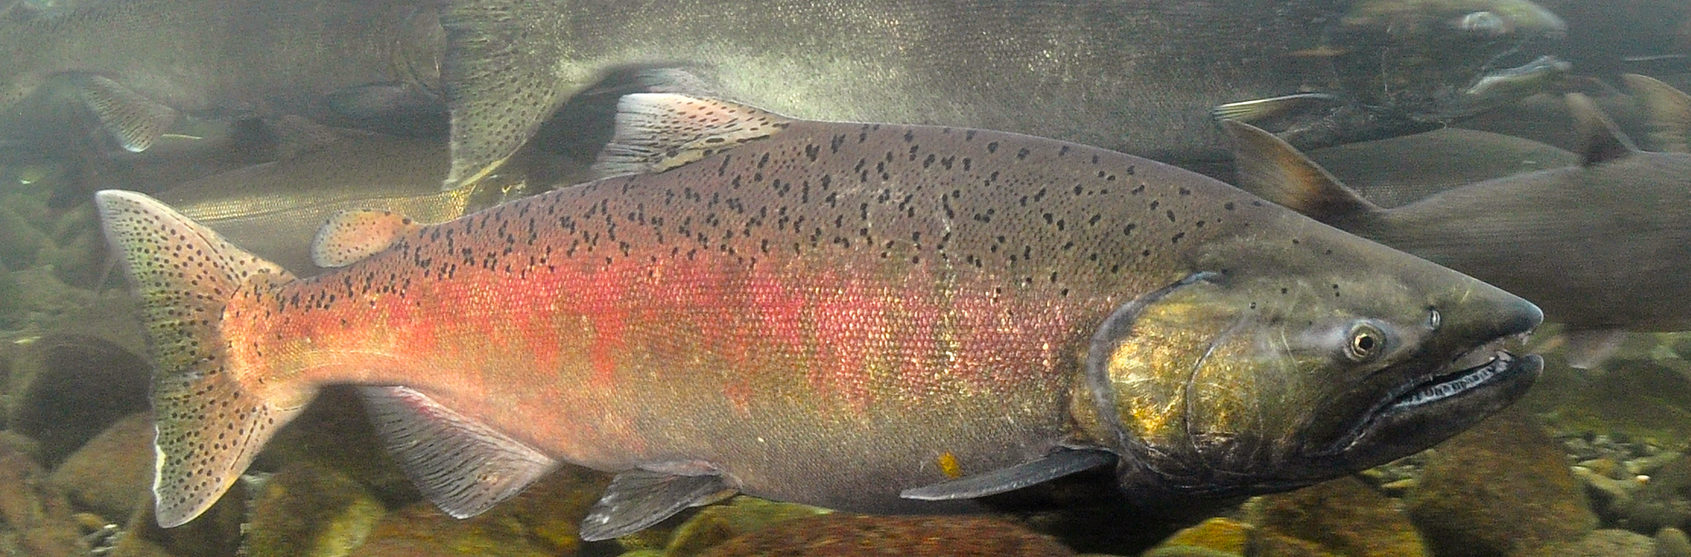 Chinook salmon (Oncorhynchus tshawytscha) in British Columbia, Canada.